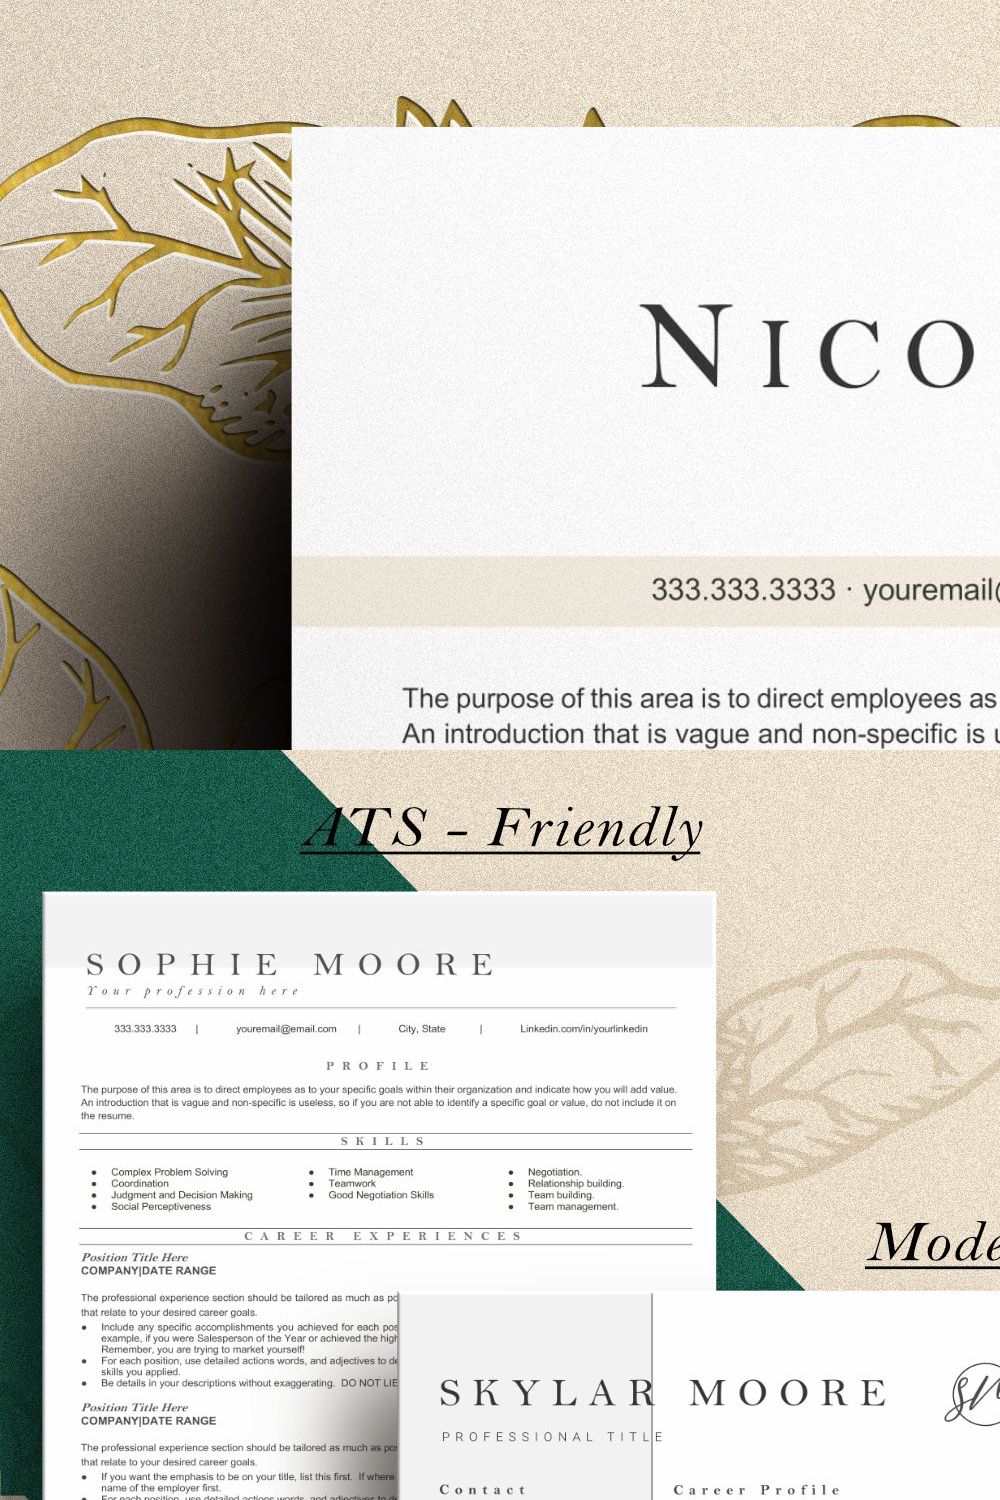 NICOLE - ATS Resume Template + BONUS pinterest preview image.